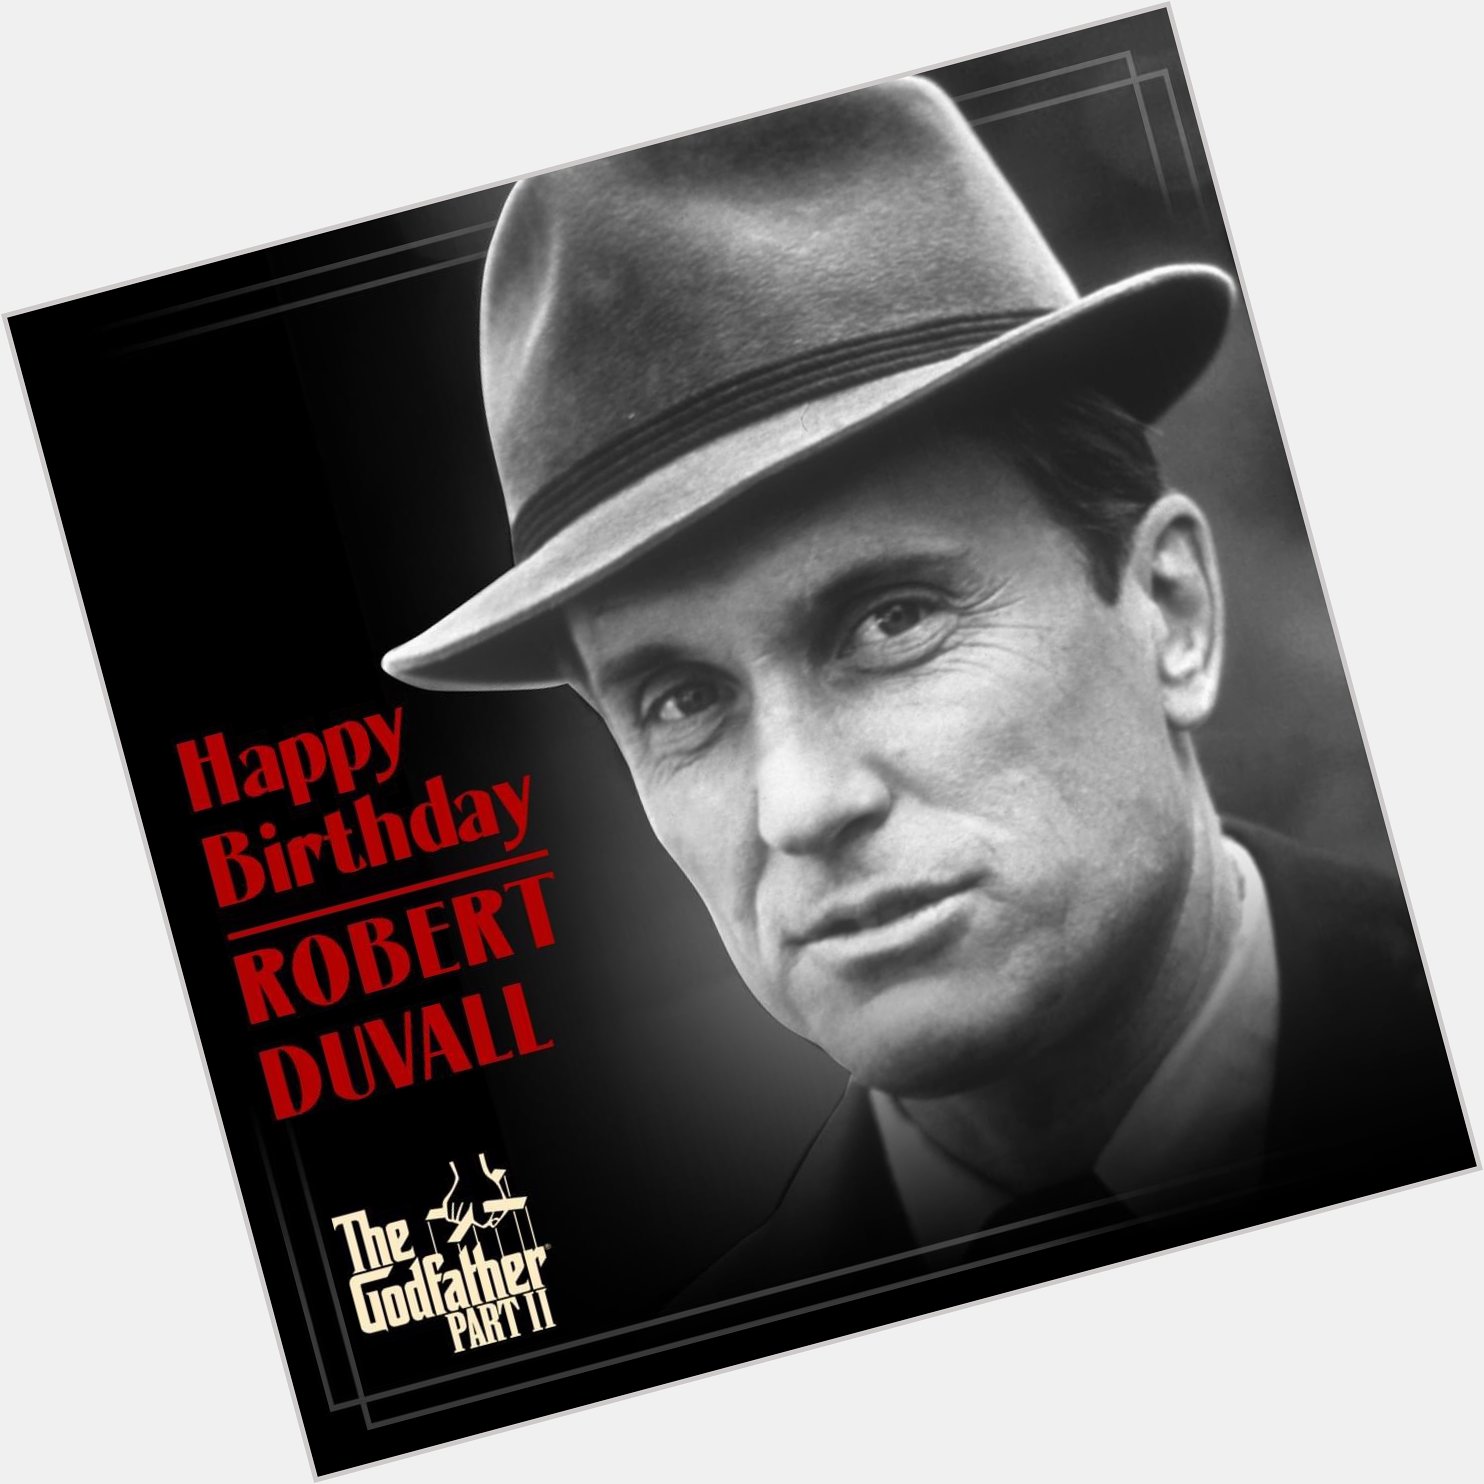 Always part of the family. Happy birthday to Robert Duvall! 